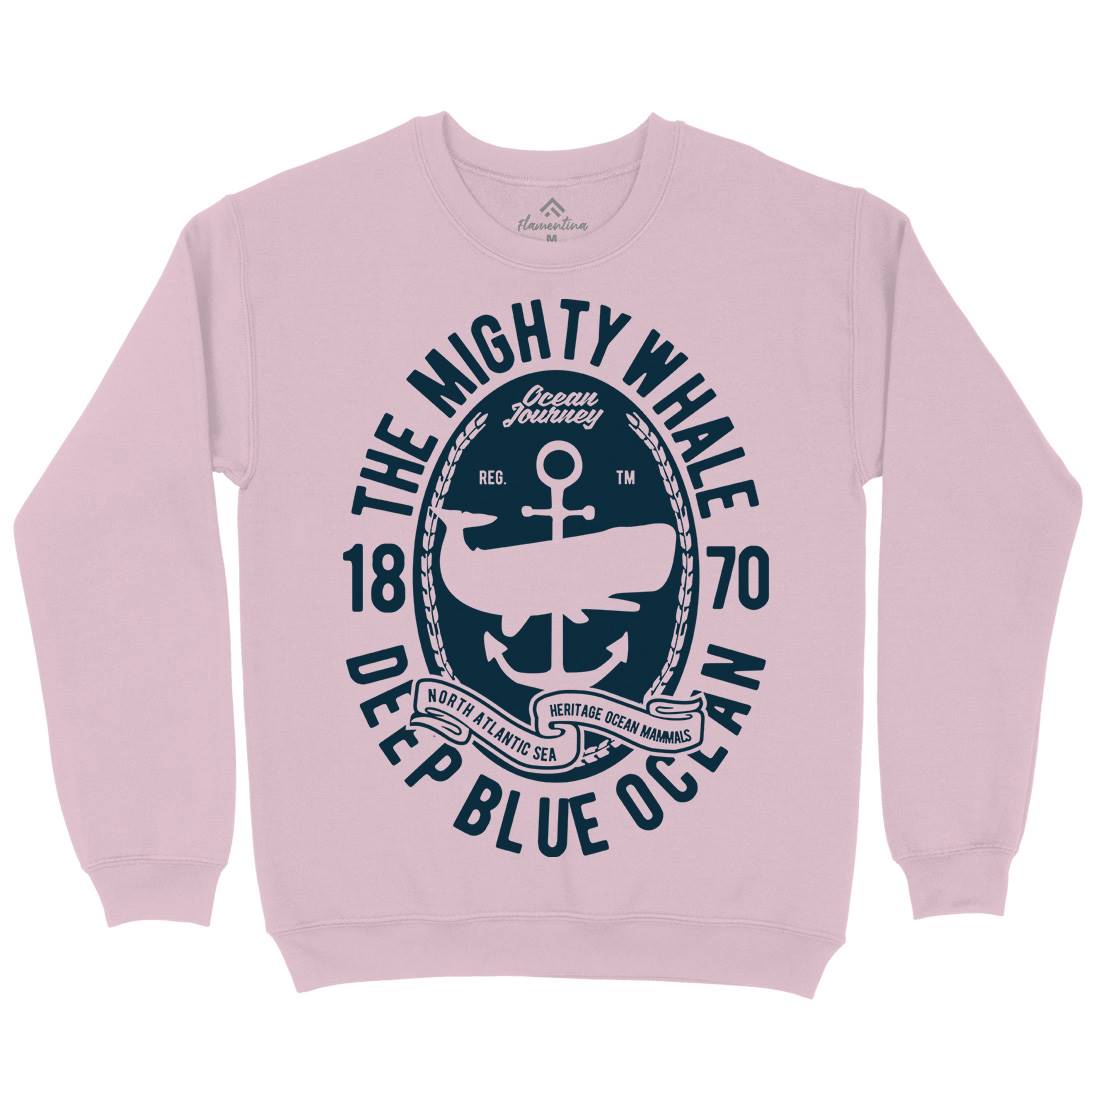 The Mighty Whale Kids Crew Neck Sweatshirt Navy B466